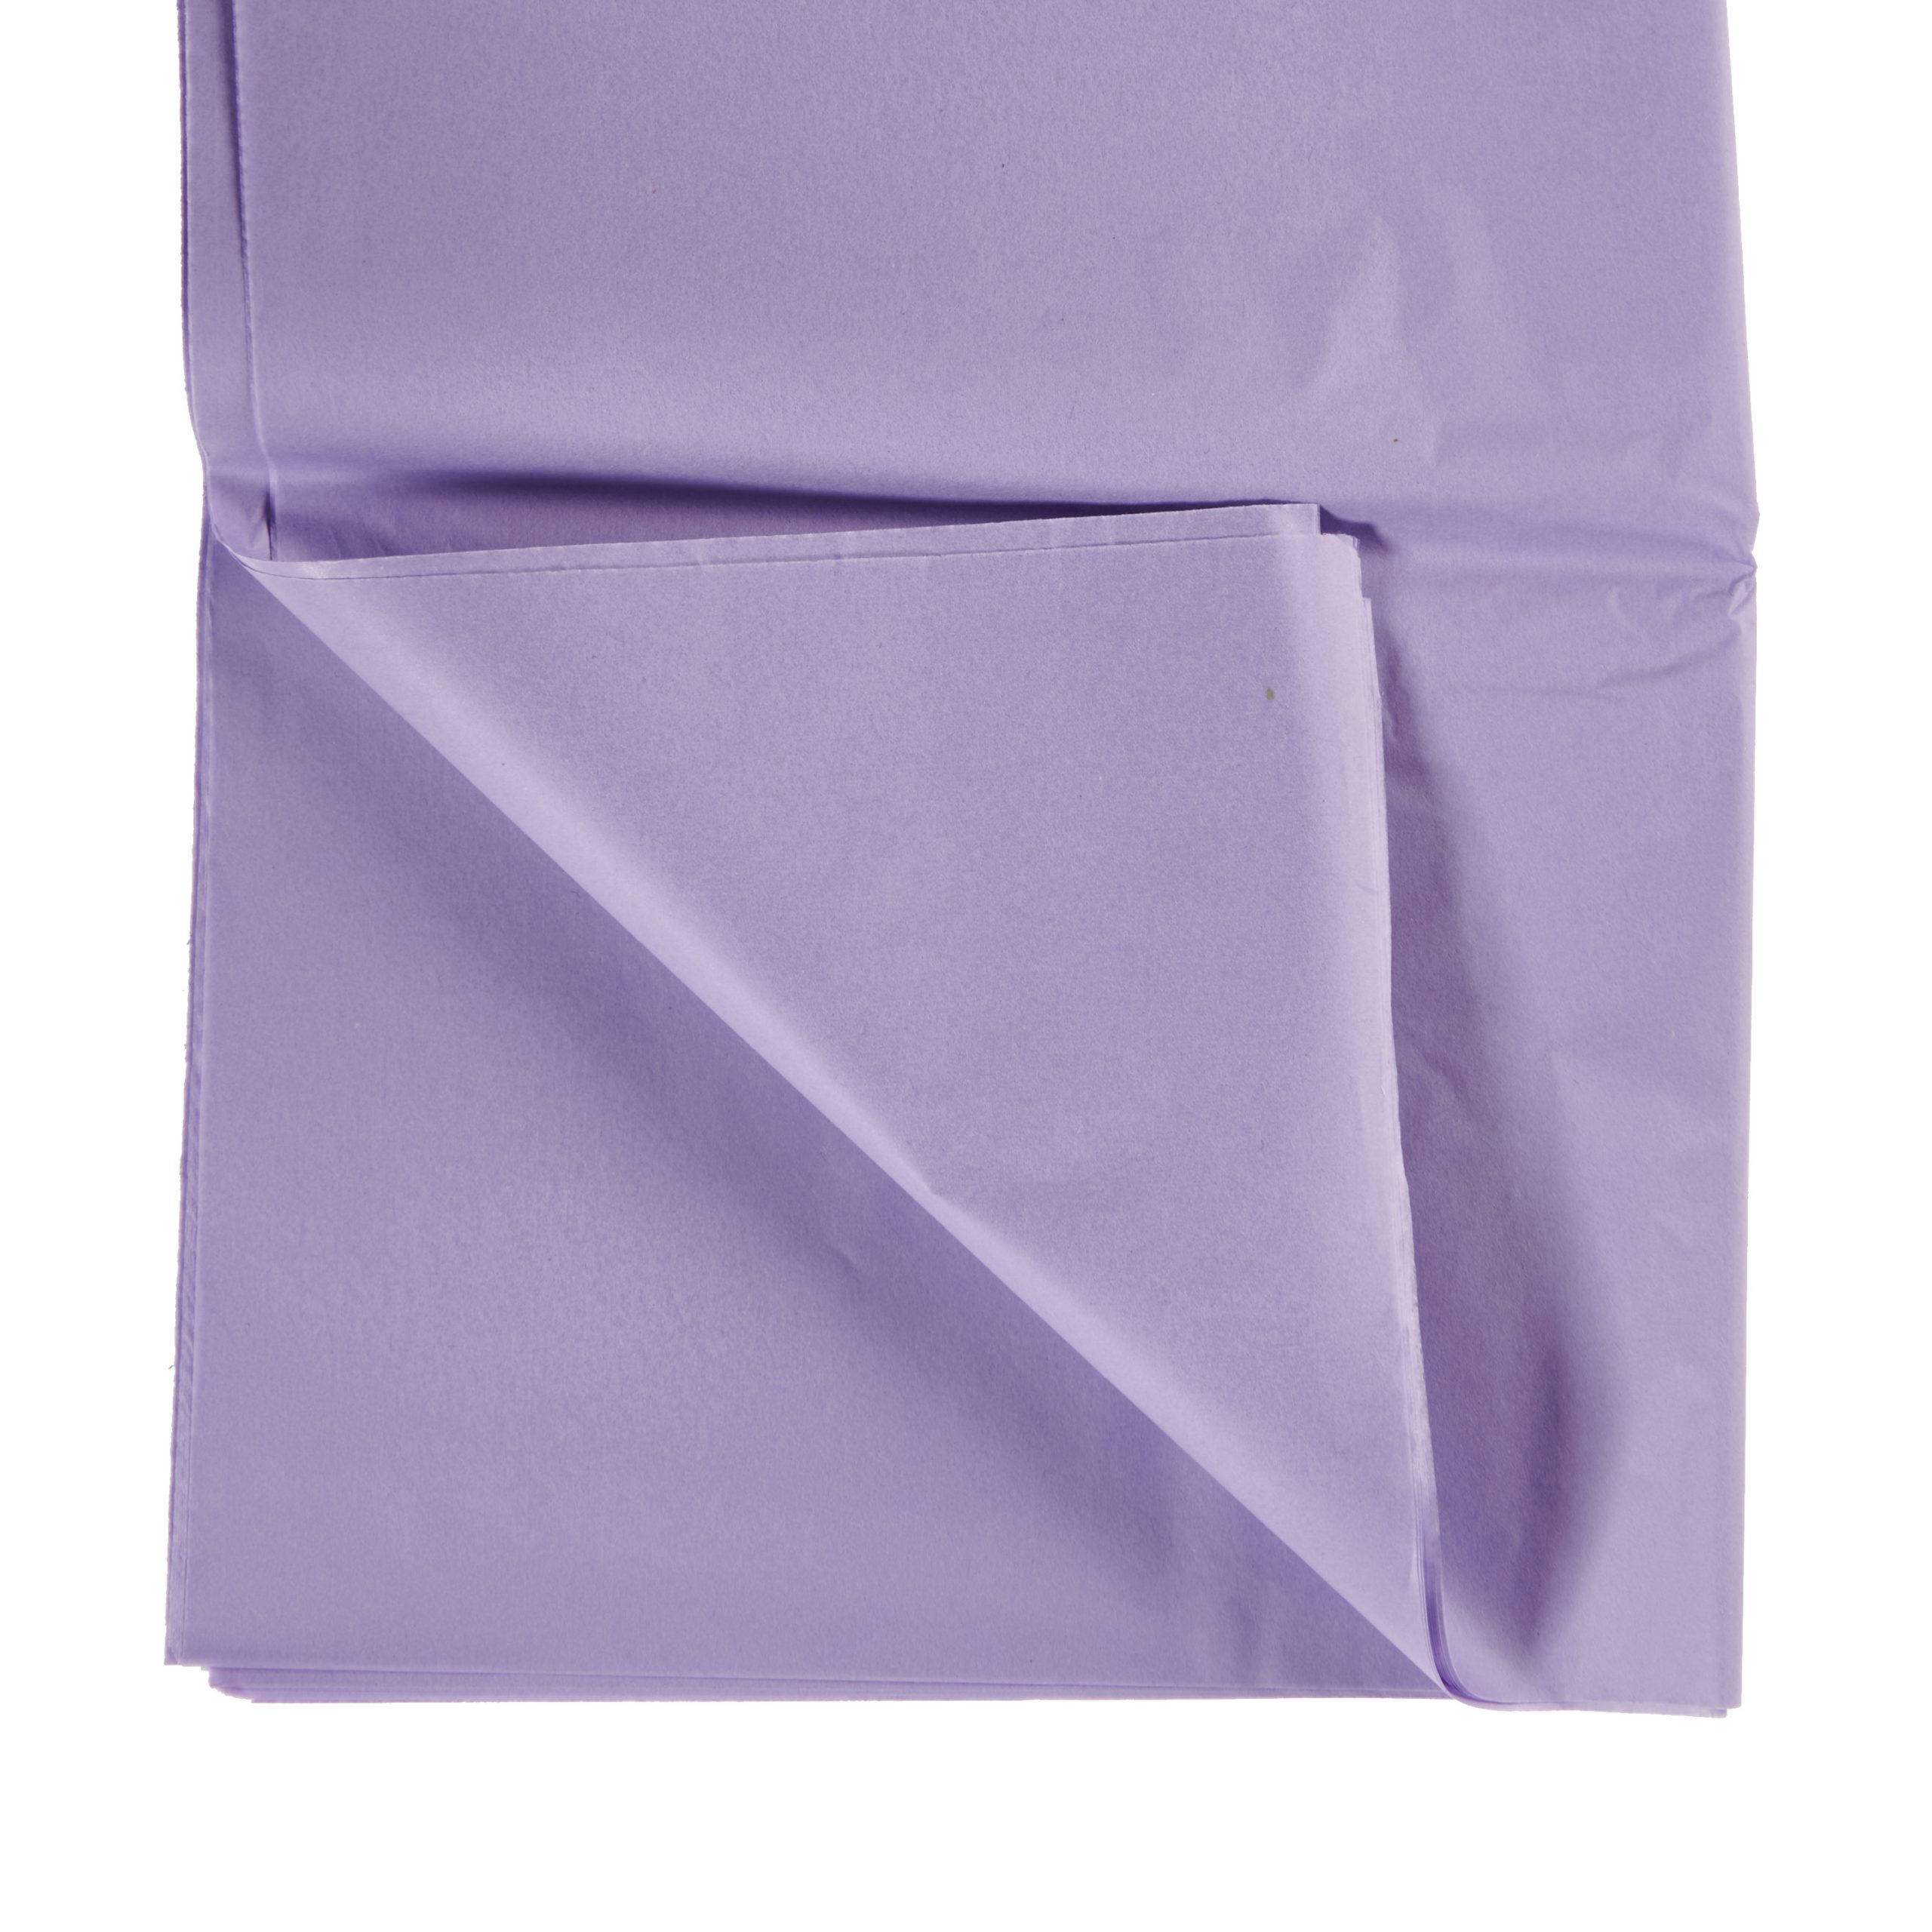 Tissue Paper Ream 750mm x 500mm, 480 Sheets - Light Pink